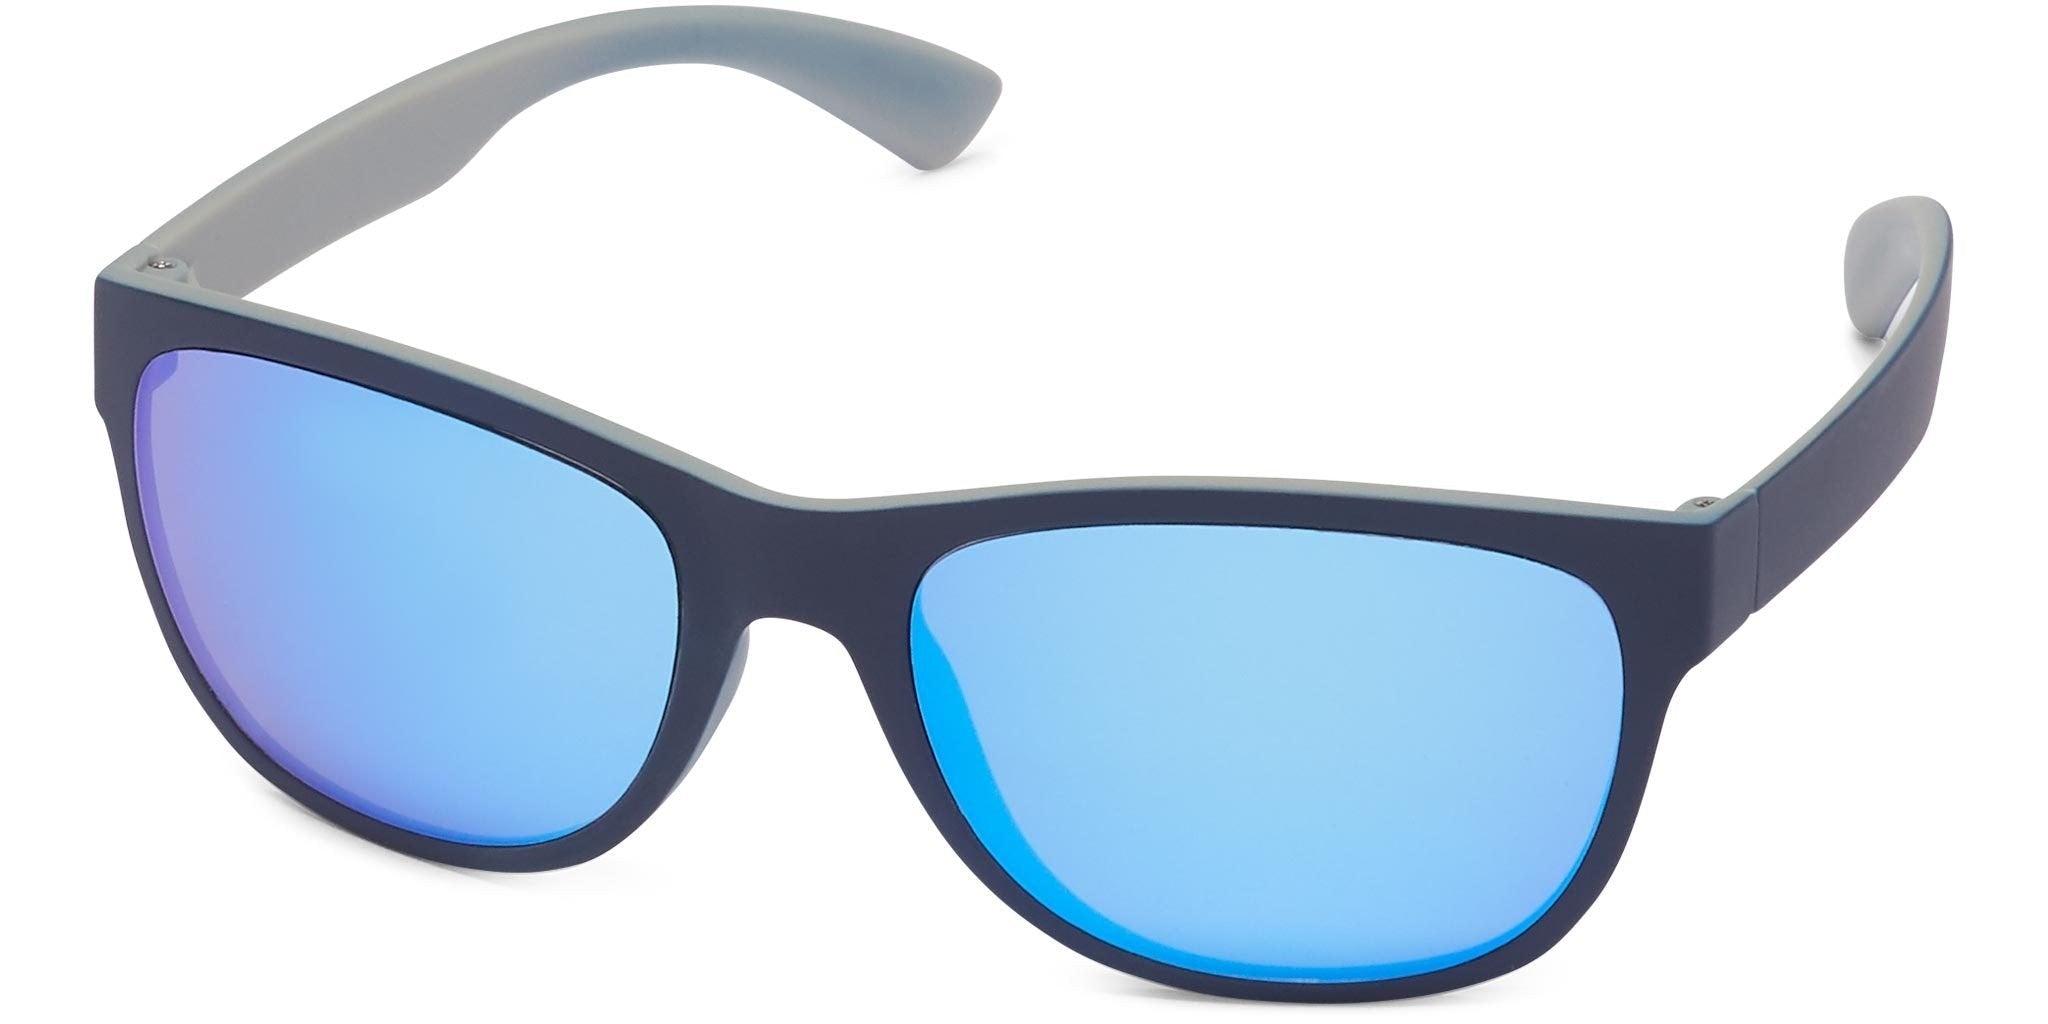 Arc Polarized Sunglasses by Fisherman Eyewear